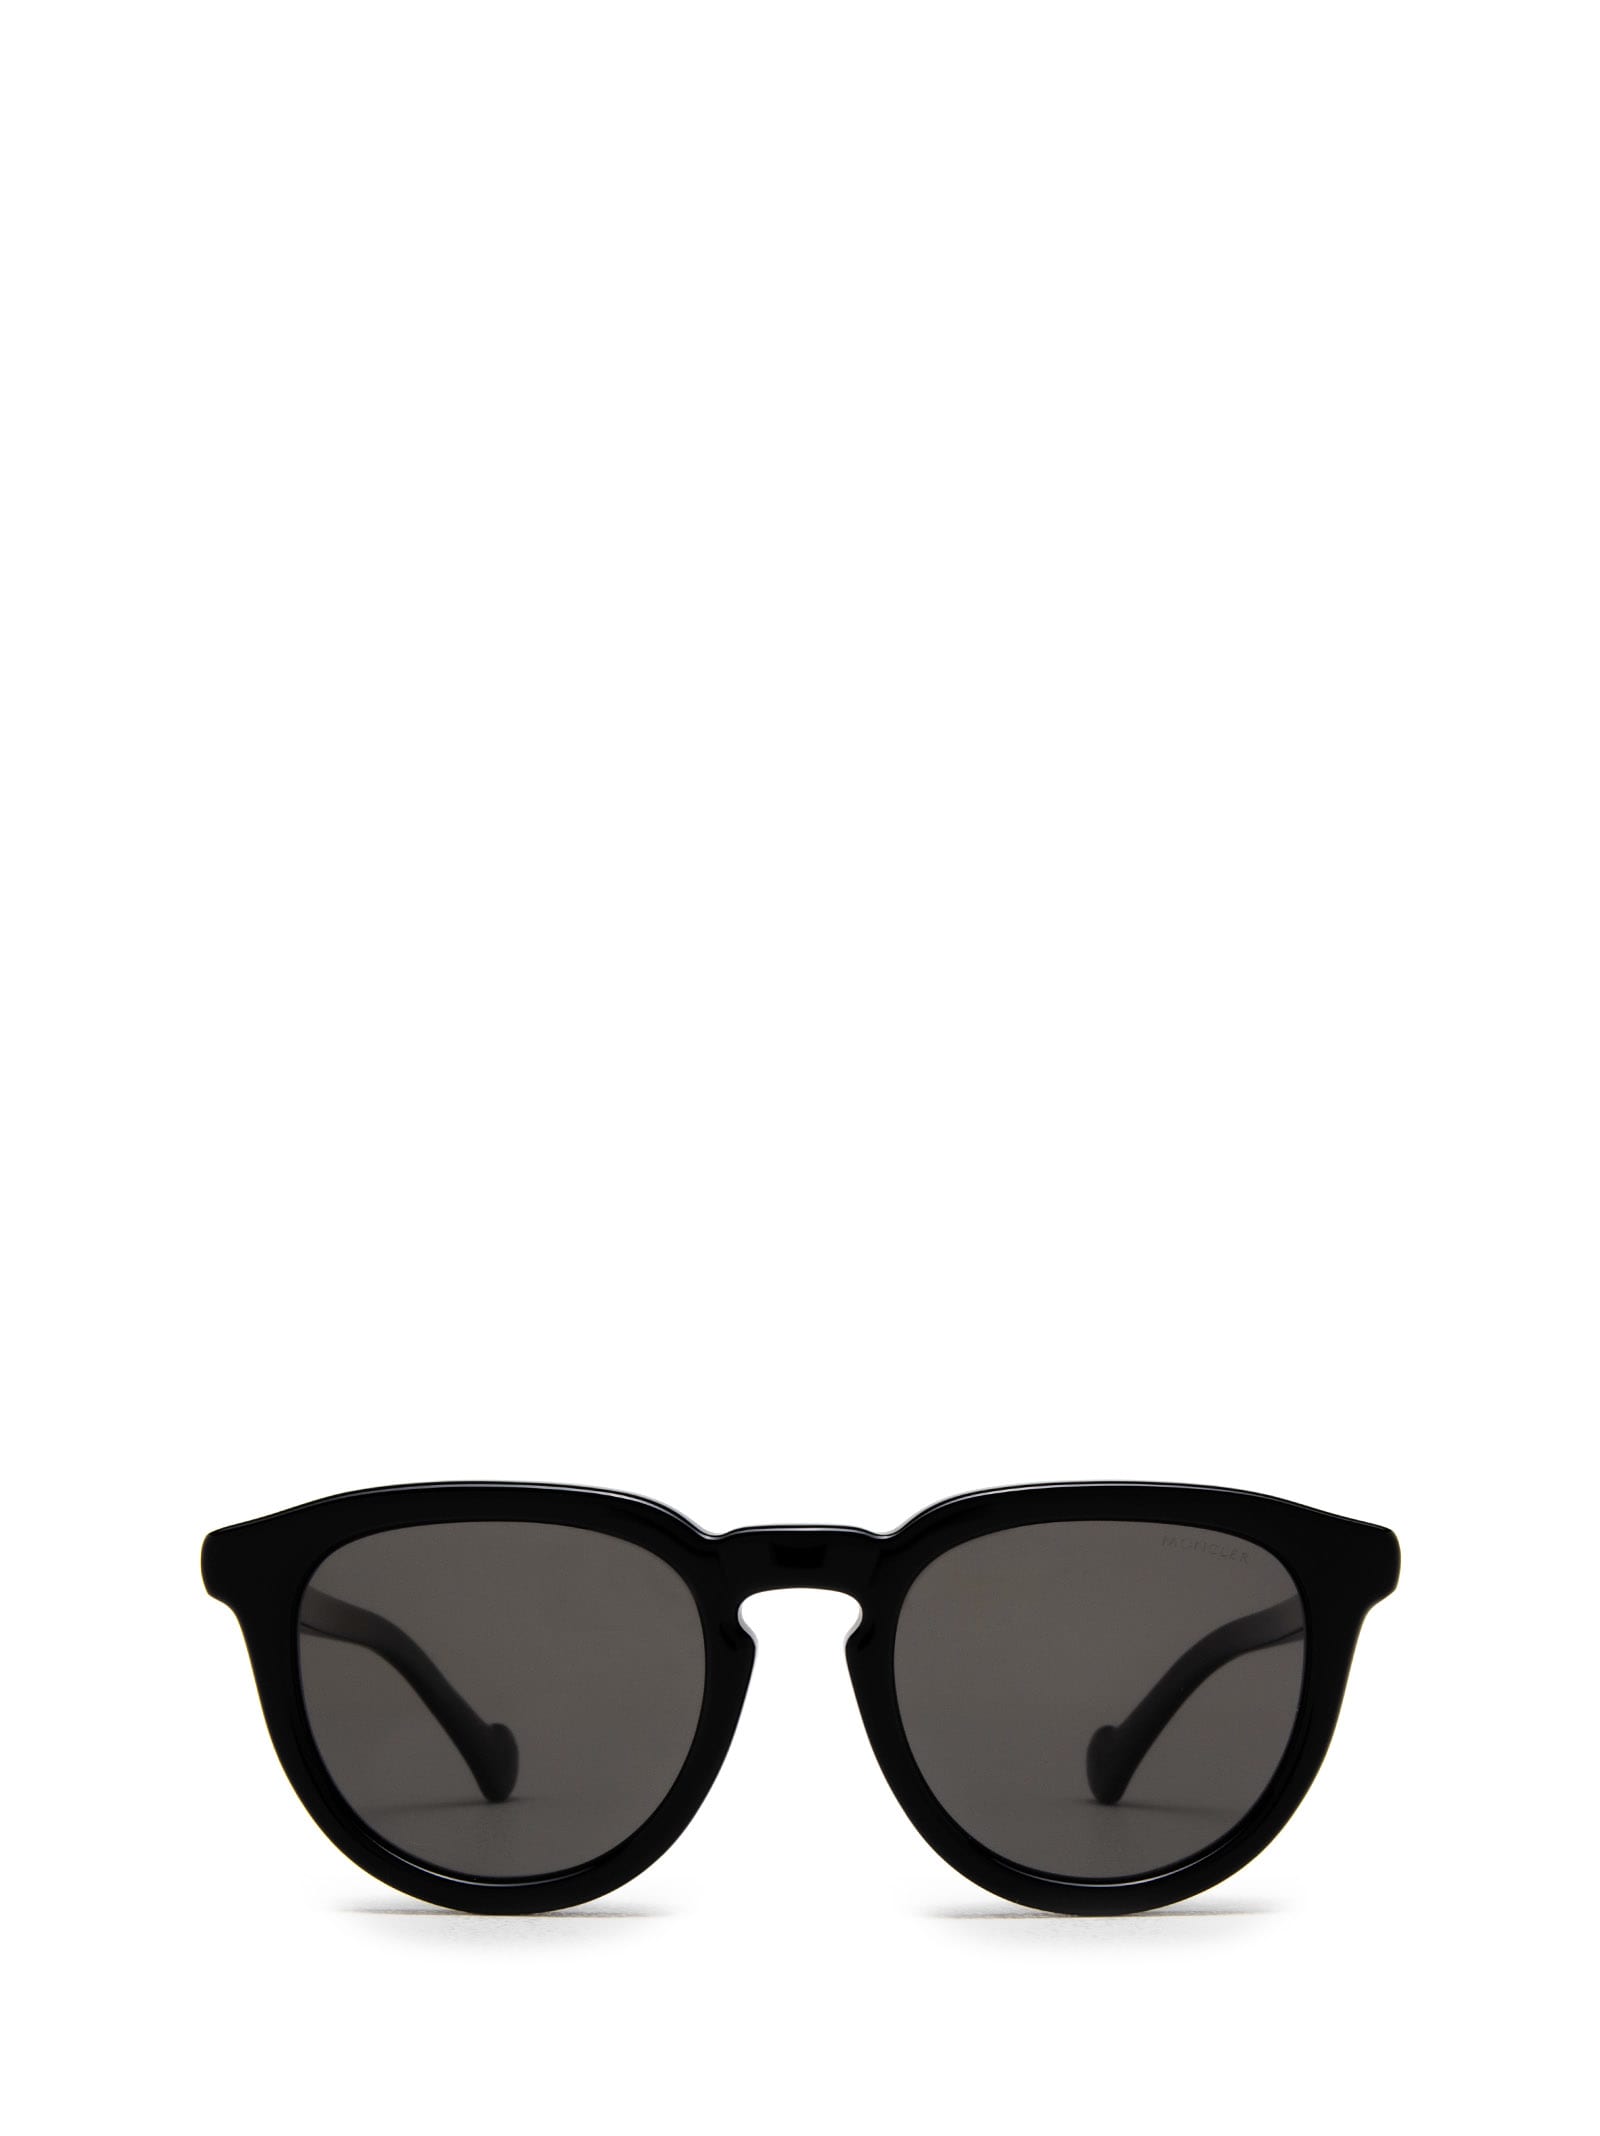 Ml0229 Shiny Black Sunglasses